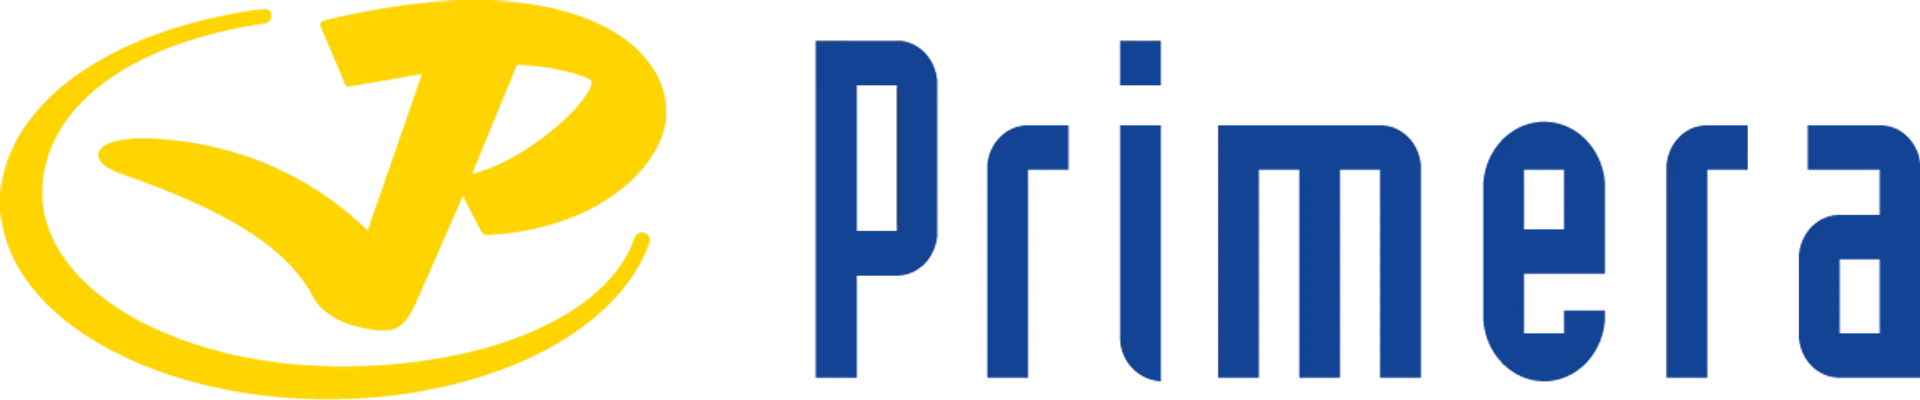 PRIMERA logo